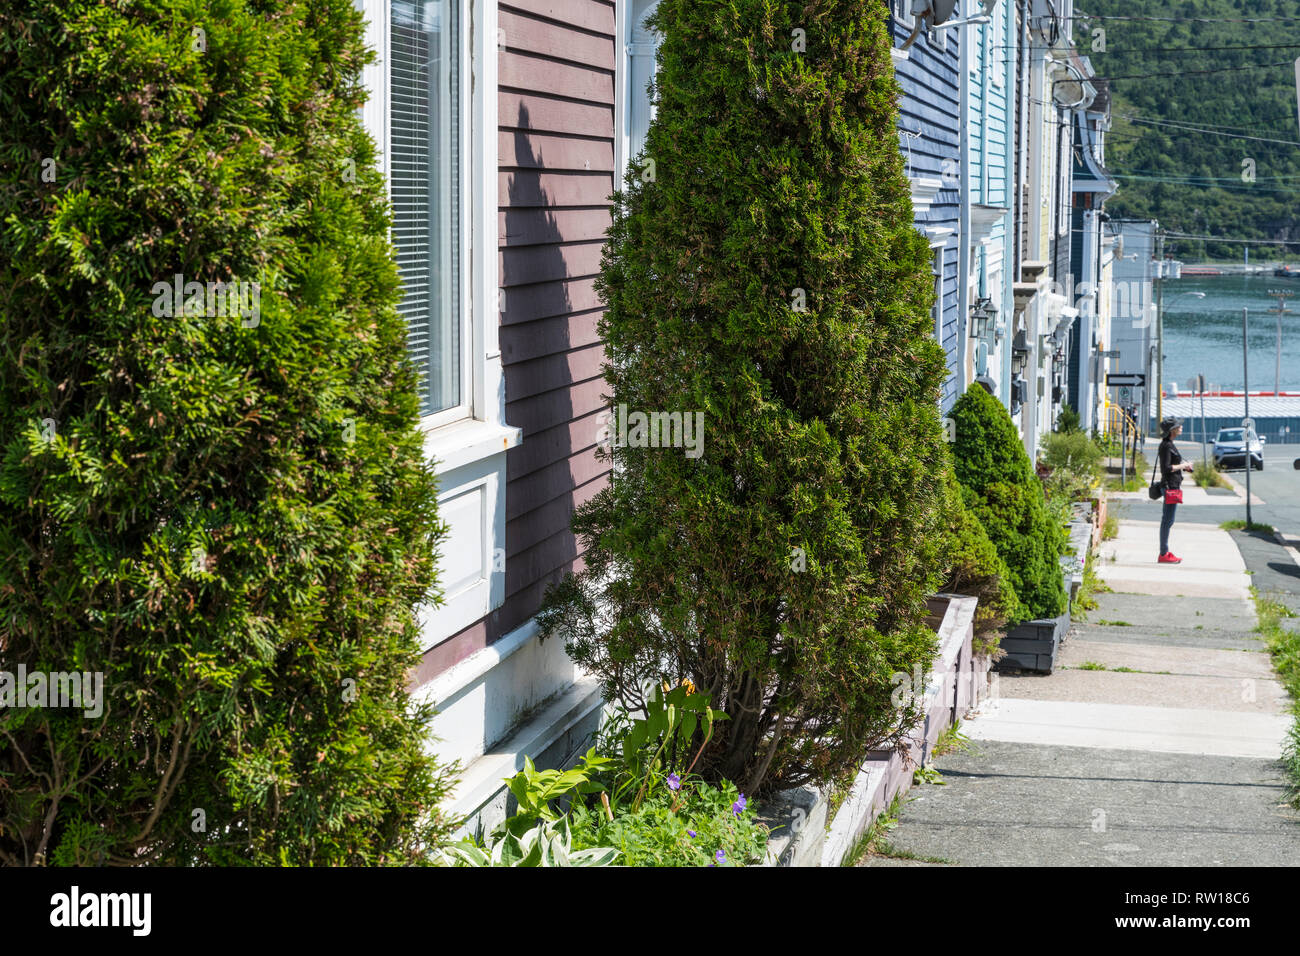 St. John's, Newfoundland, strata scene, colourful houses Stock Photo